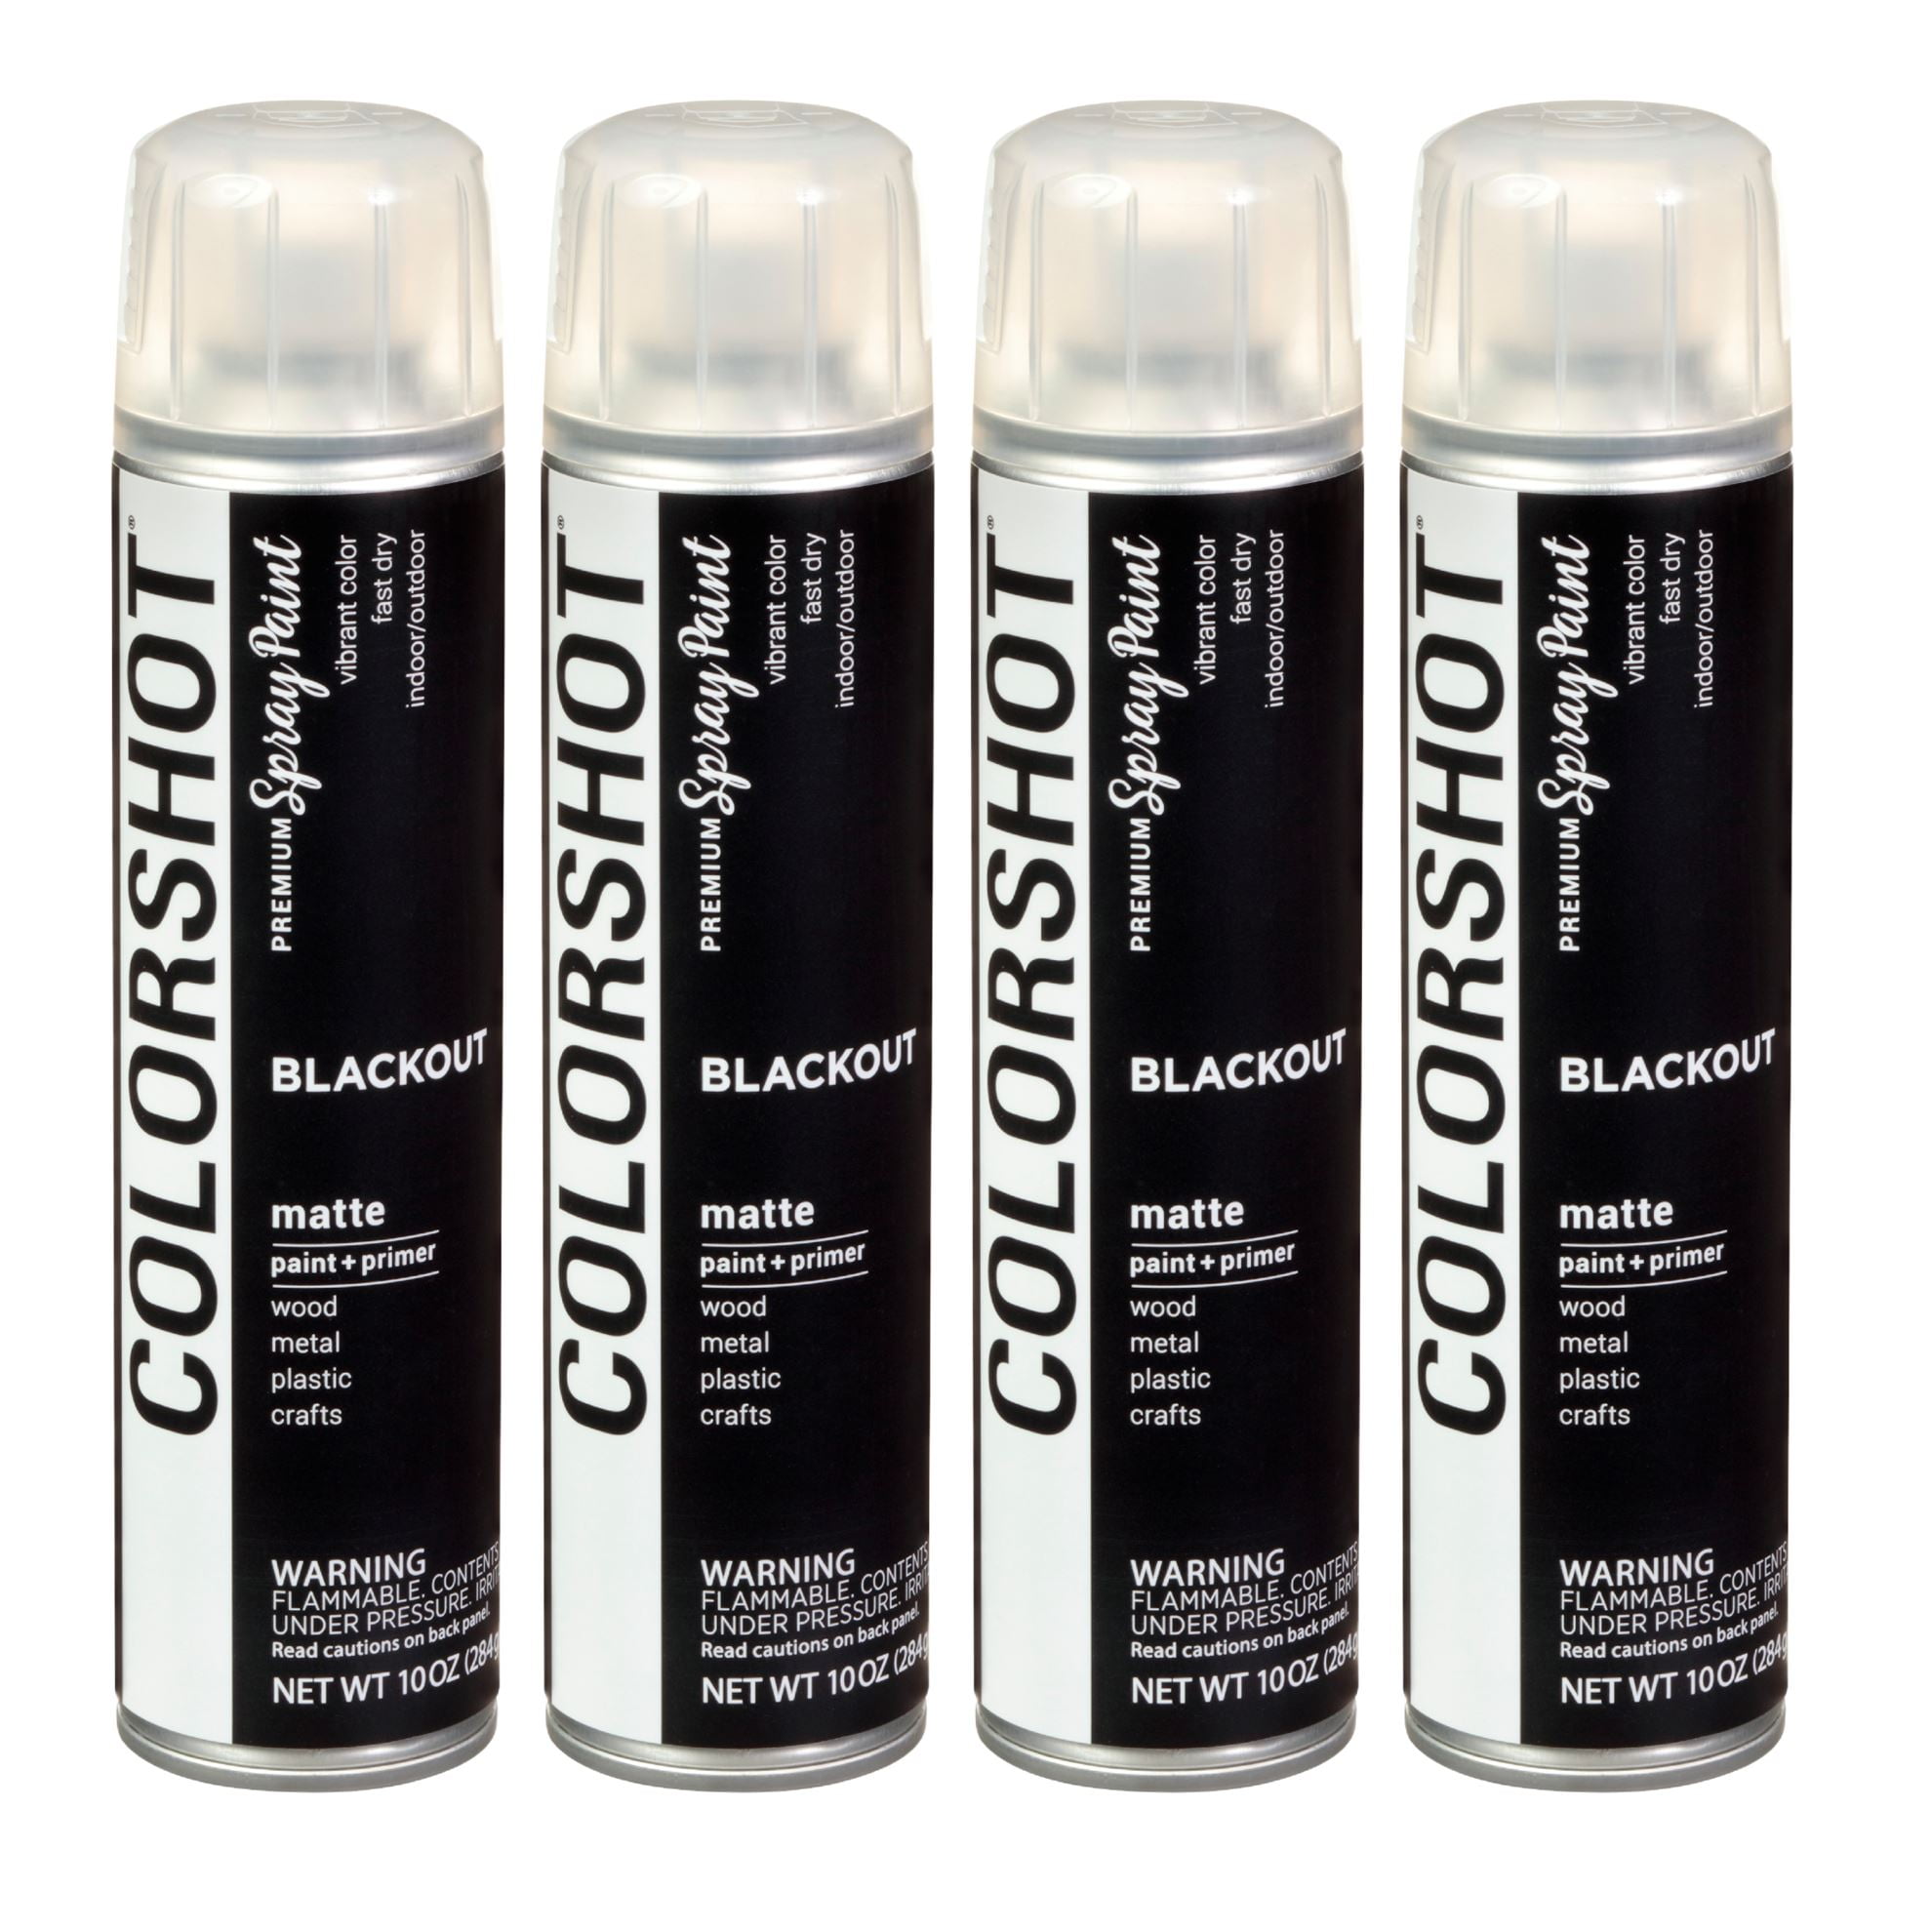 COLORSHOT Premium Multi-Surface Glitter VIP Gold Spray Paint - 8 oz - Gold